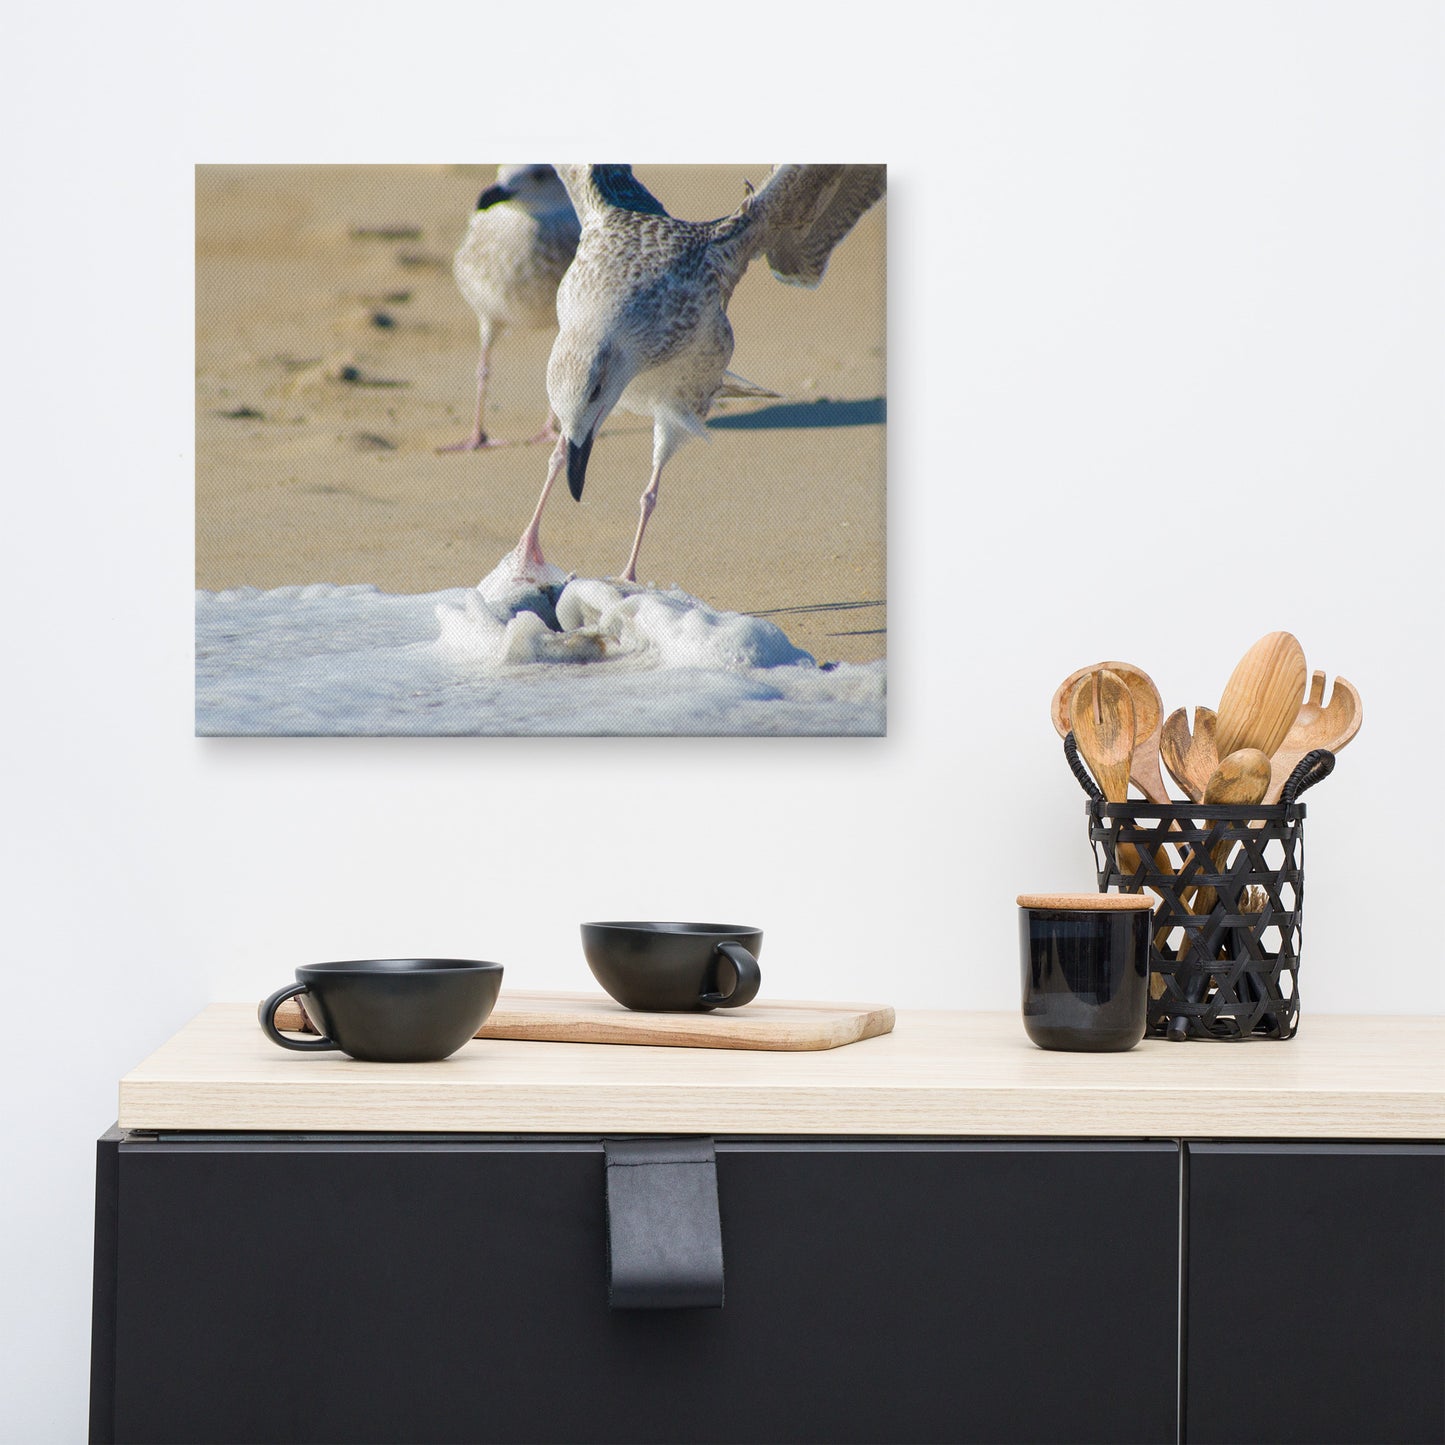 Oh That's Cold Coastal Bird Animal / Wildlife Photograph Canvas Wall Art Prints